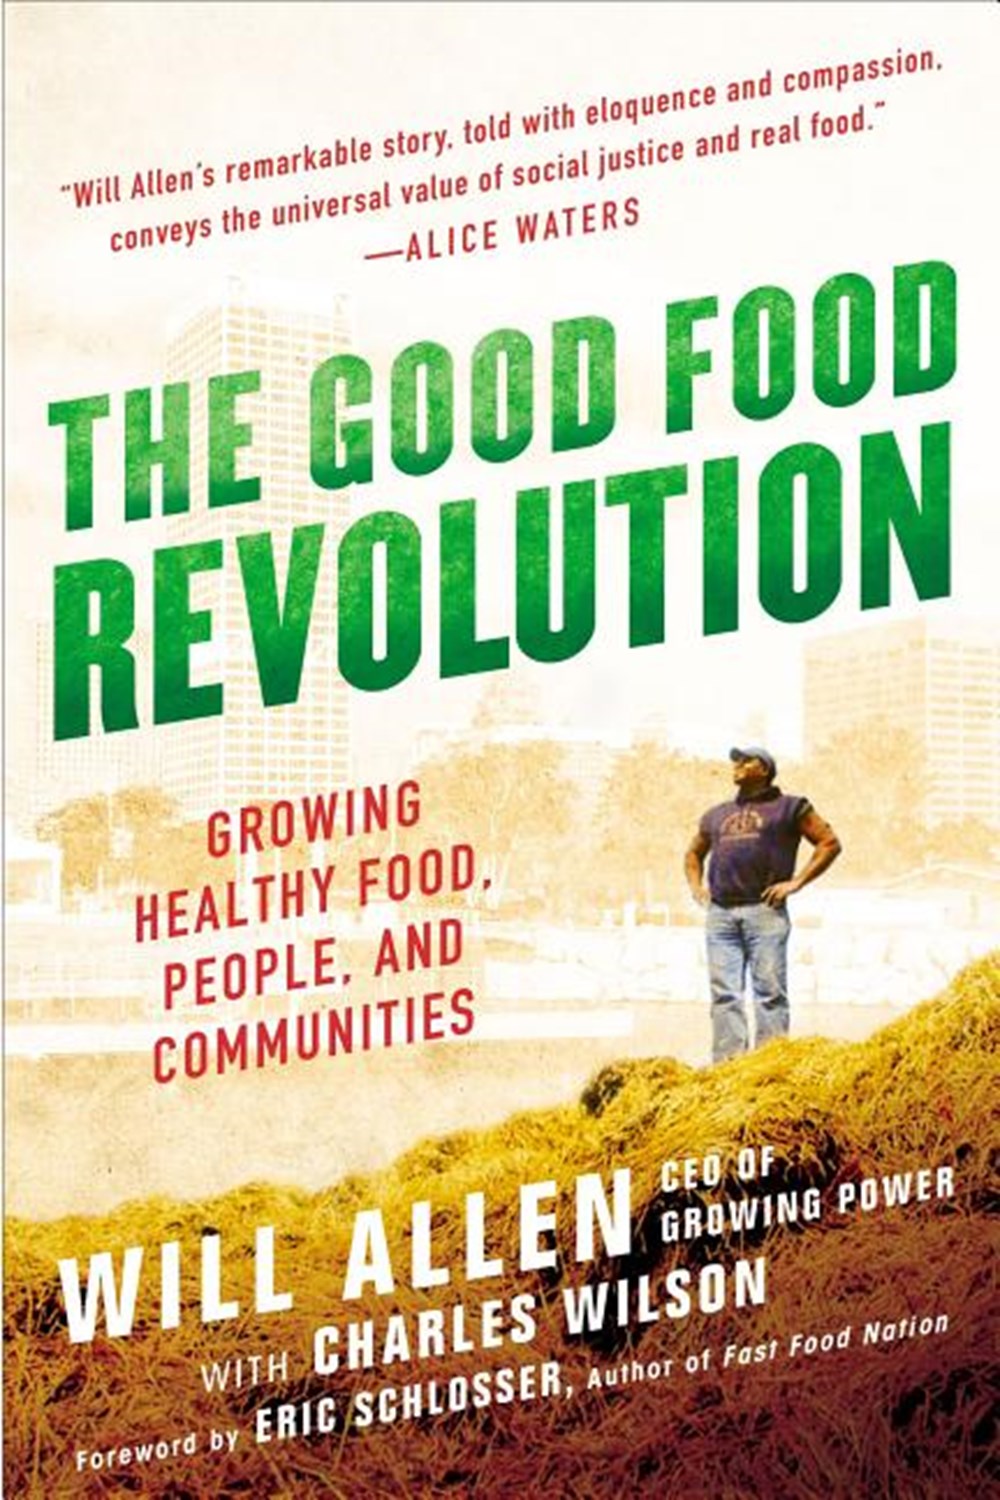 Good Food Revolution Growing Healthy Food, People, and Communities